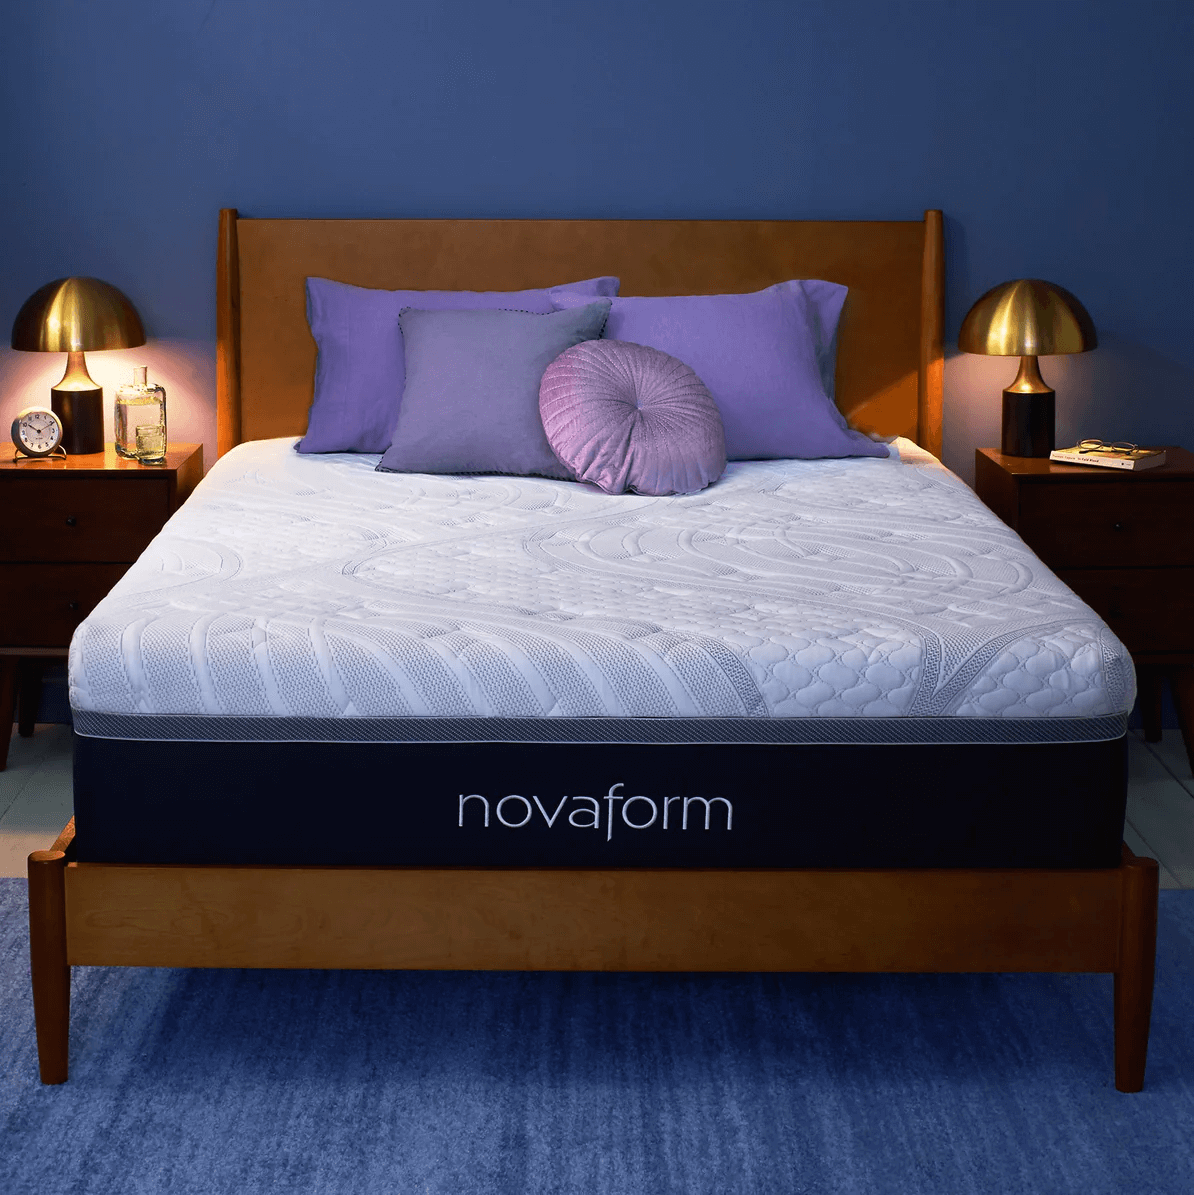 The construction of Novaform ComfortGrande mattress is all-foam layers